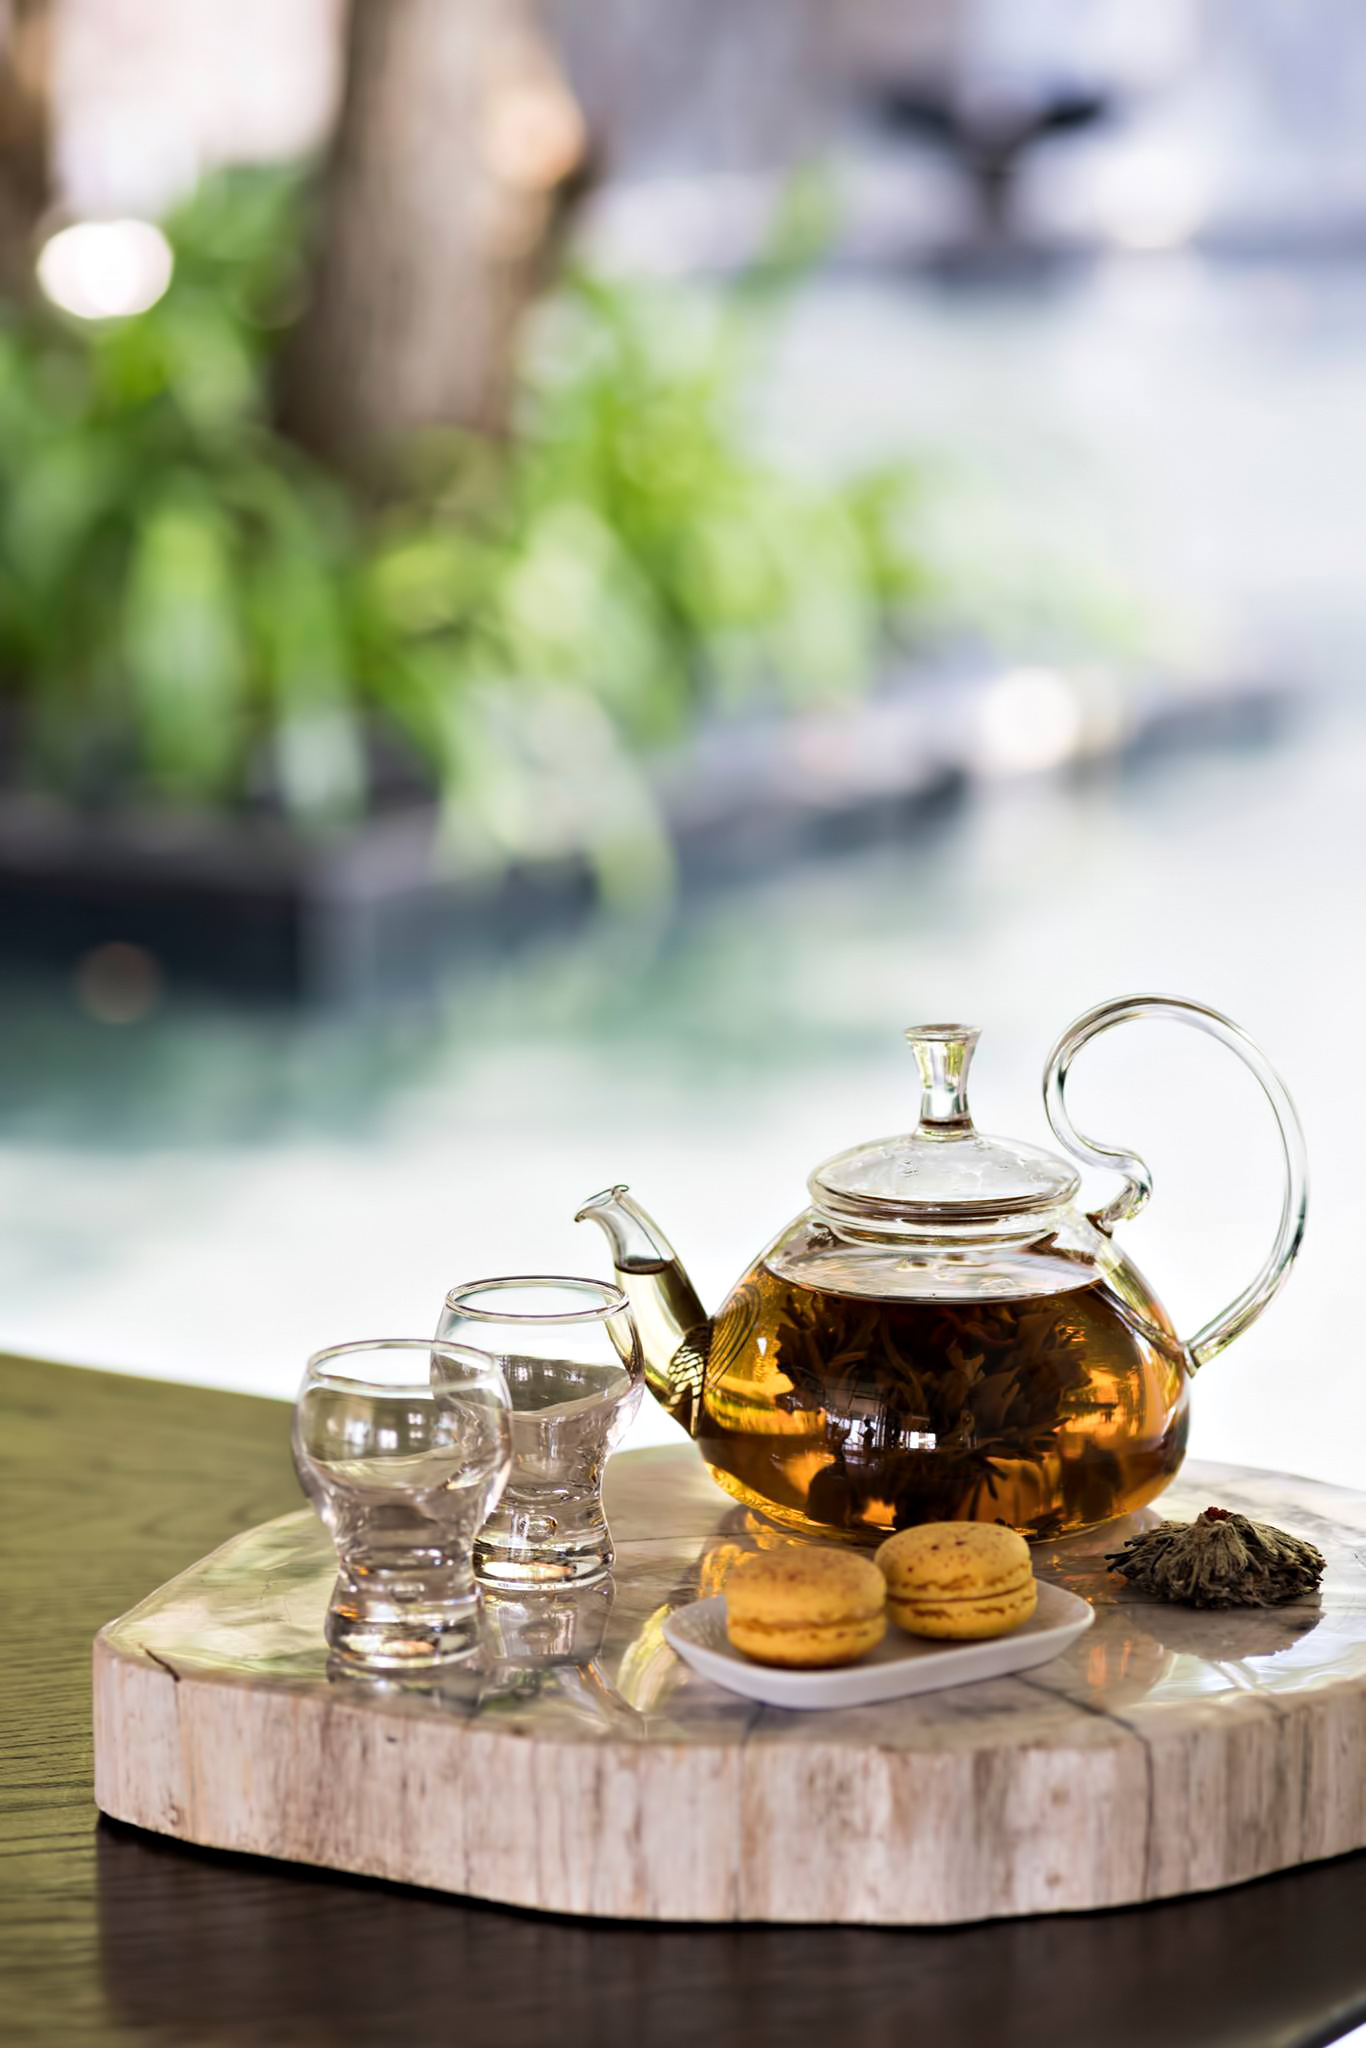 Cheval Blanc Randheli Resort - Noonu Atoll, Maldives - Private Island Tea Service